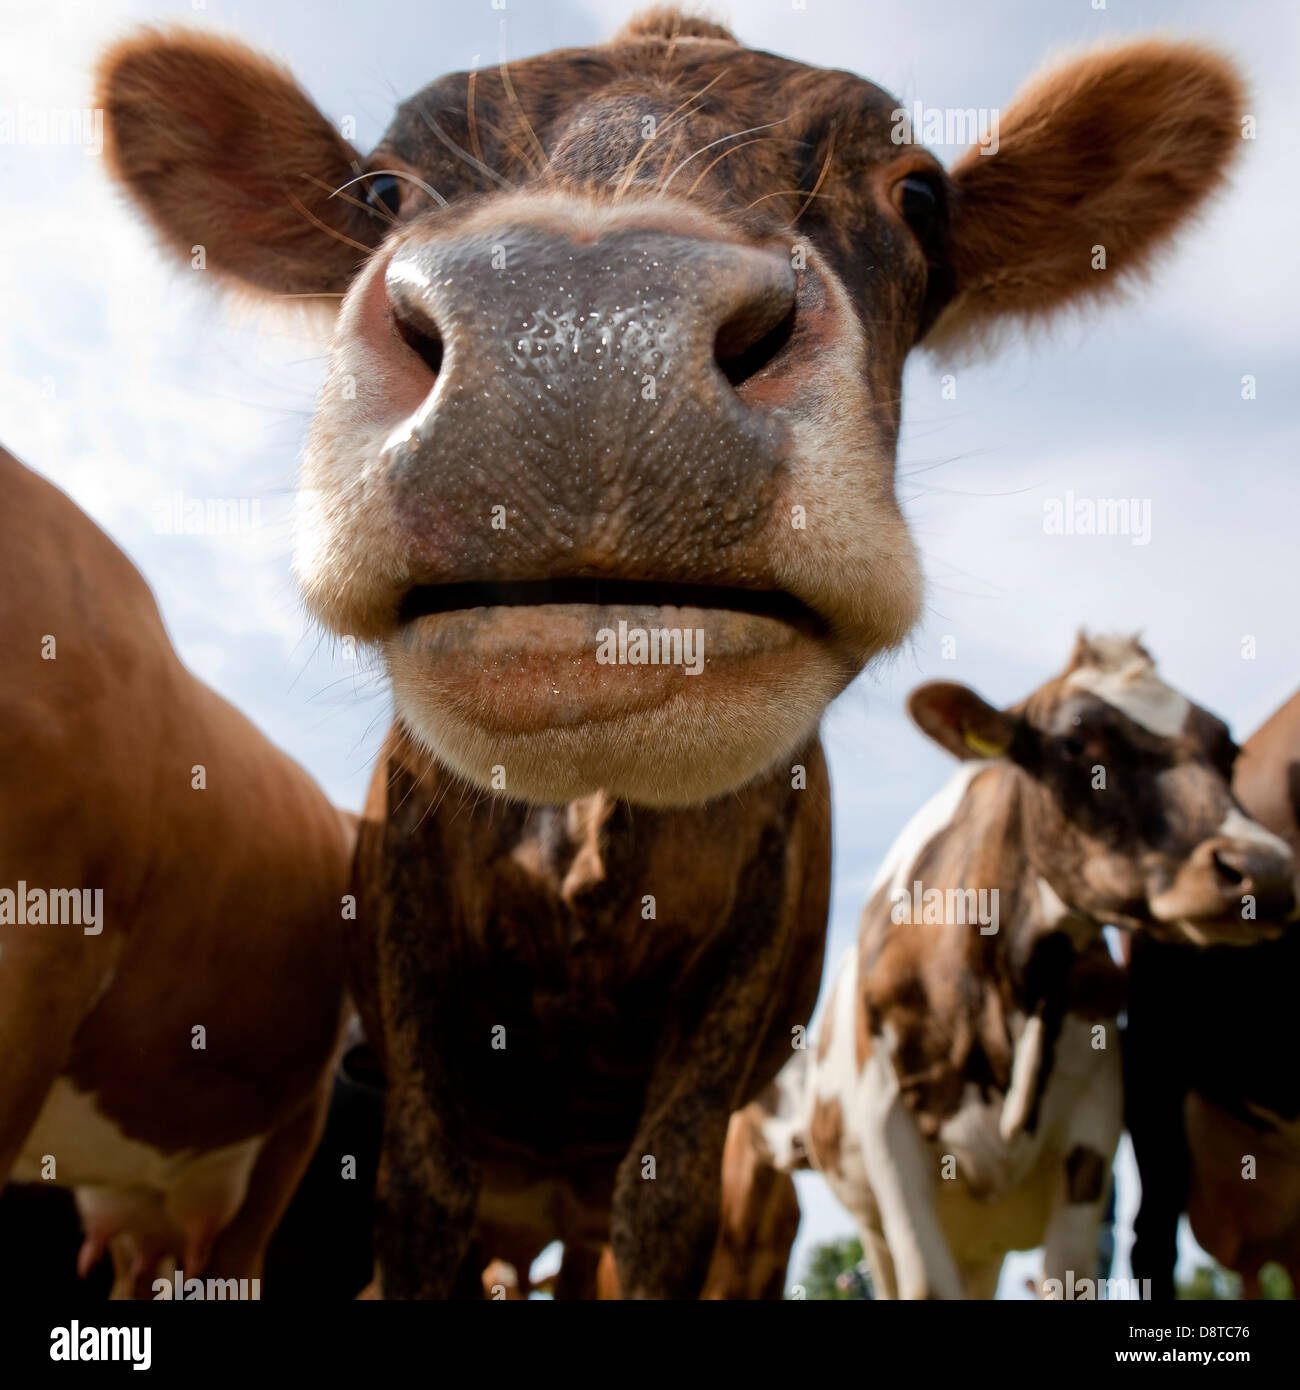 Dairy cows grazing, Hvalfjordur, Iceland Stock Photo